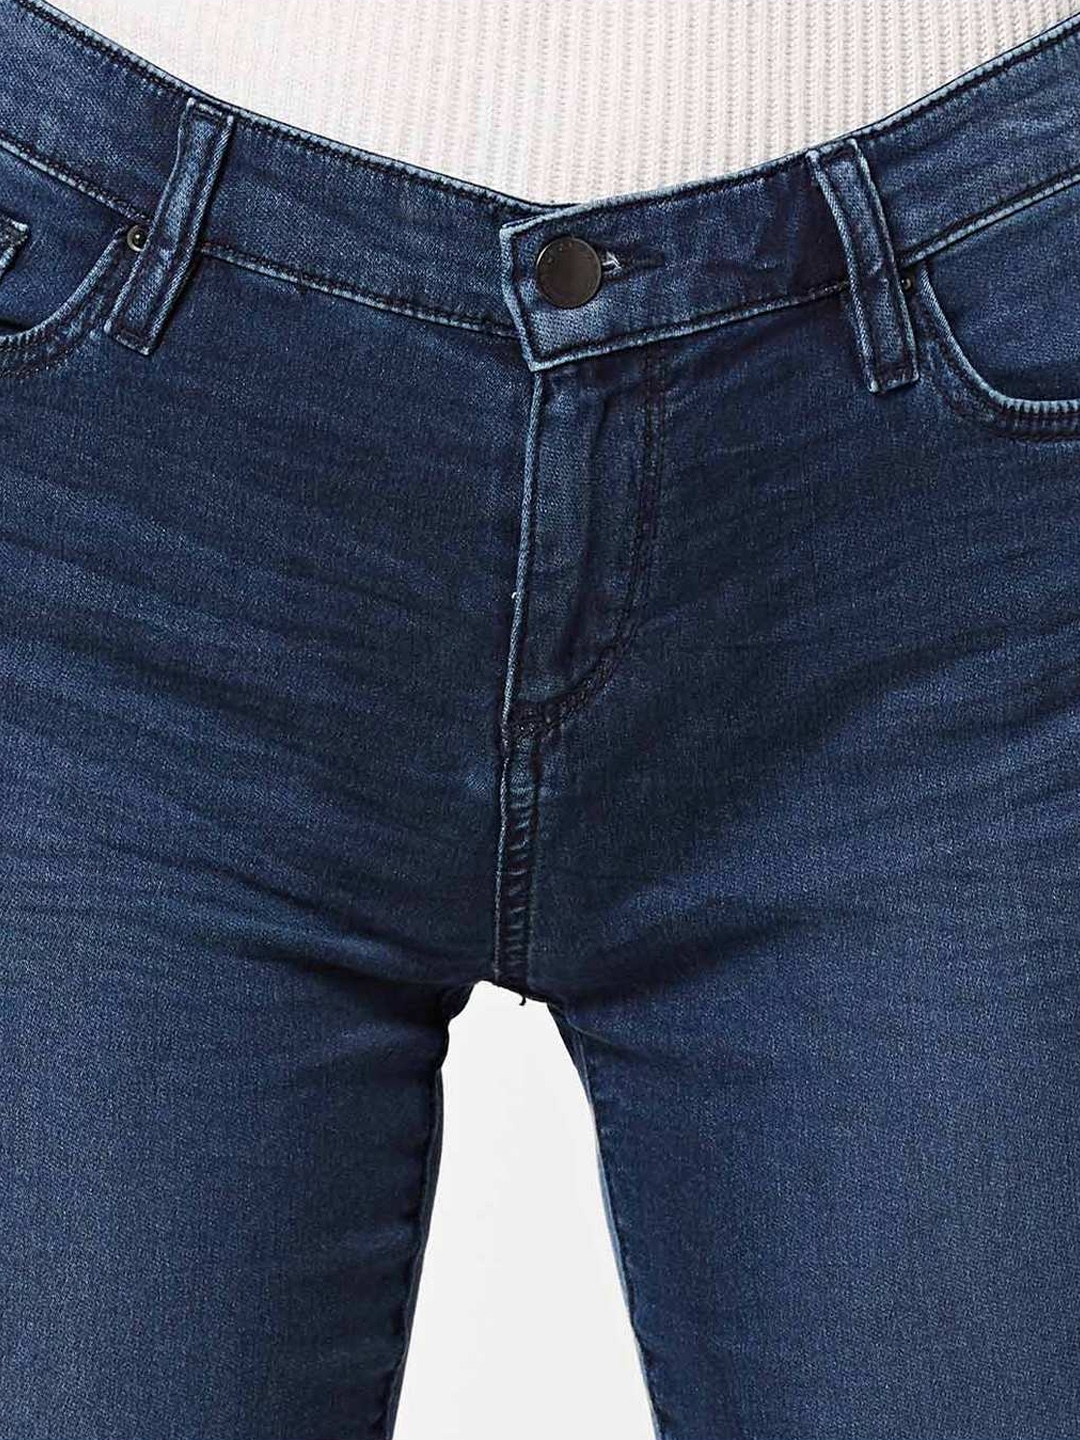 Women's medium wash skinny fit Star motion jeans